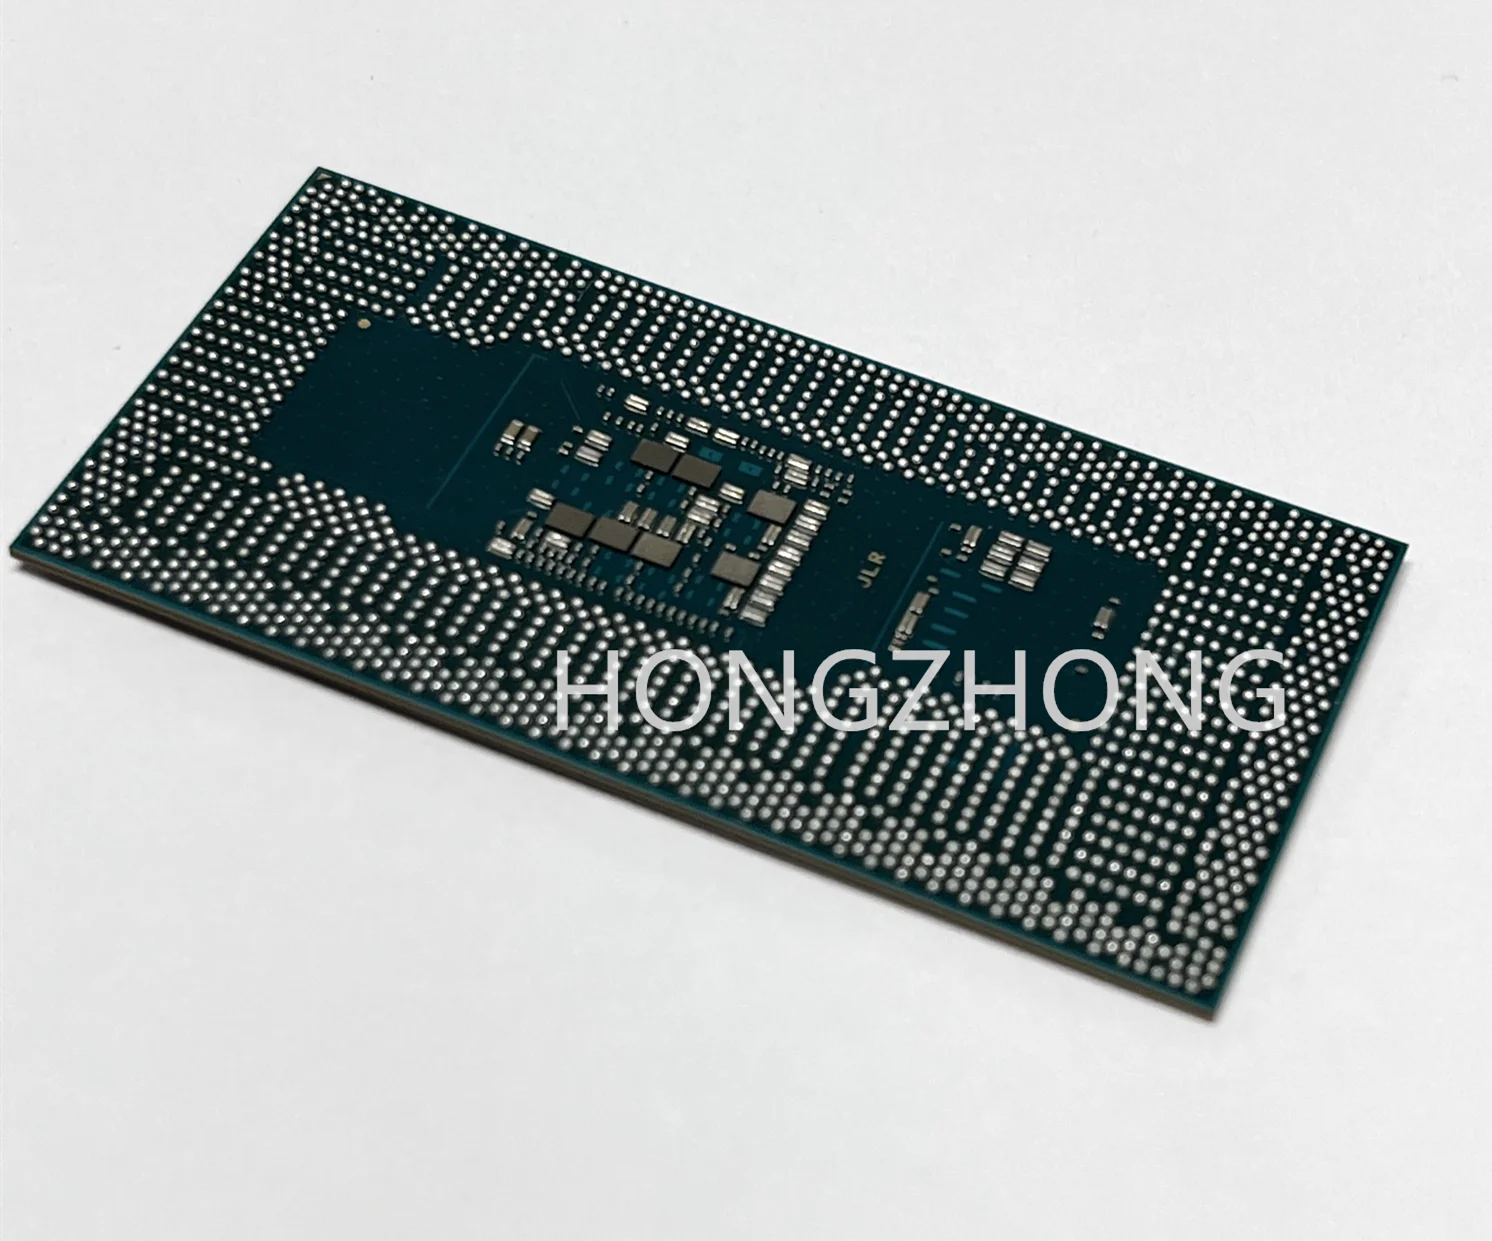 I7-1165G7 SRK01 CPU